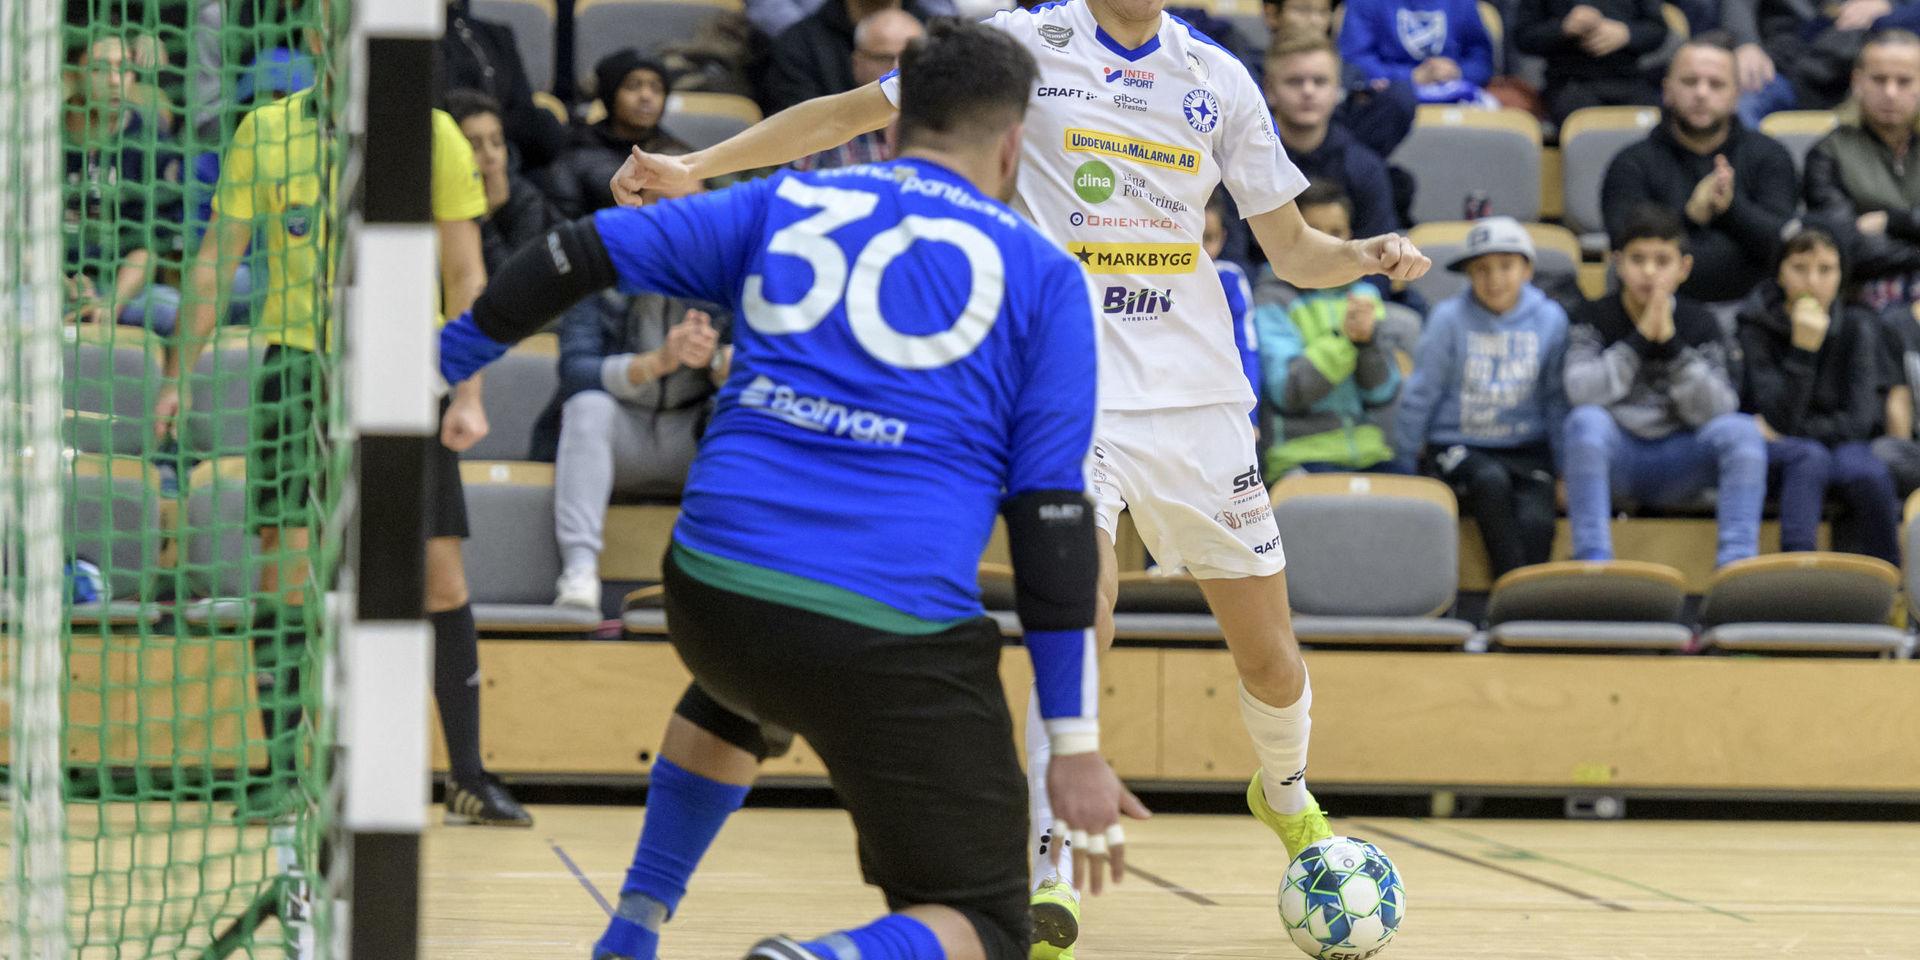 Landslagsspelaren Fredrik Söderqvist gjorde tre mål borta mot Torslanda. 